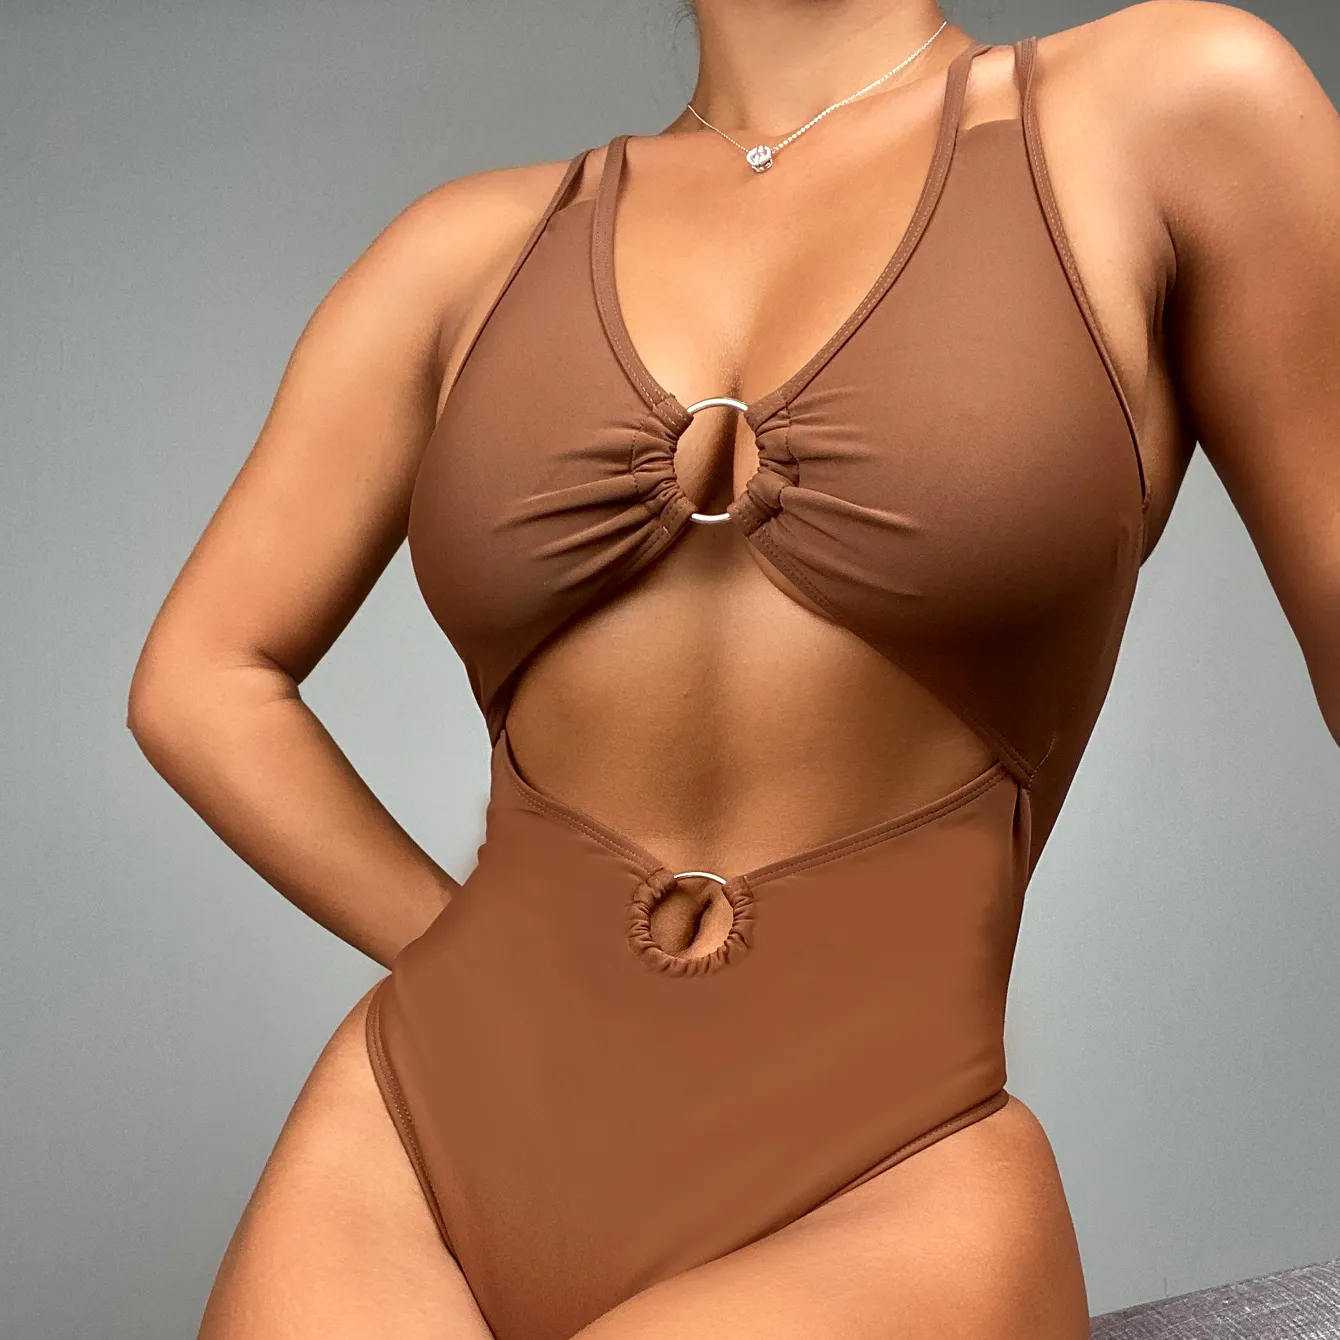 New Stock Women's Back Cross Solid Color One-piece Swimsuit Brown Metal Rings Bikini Beach Wear